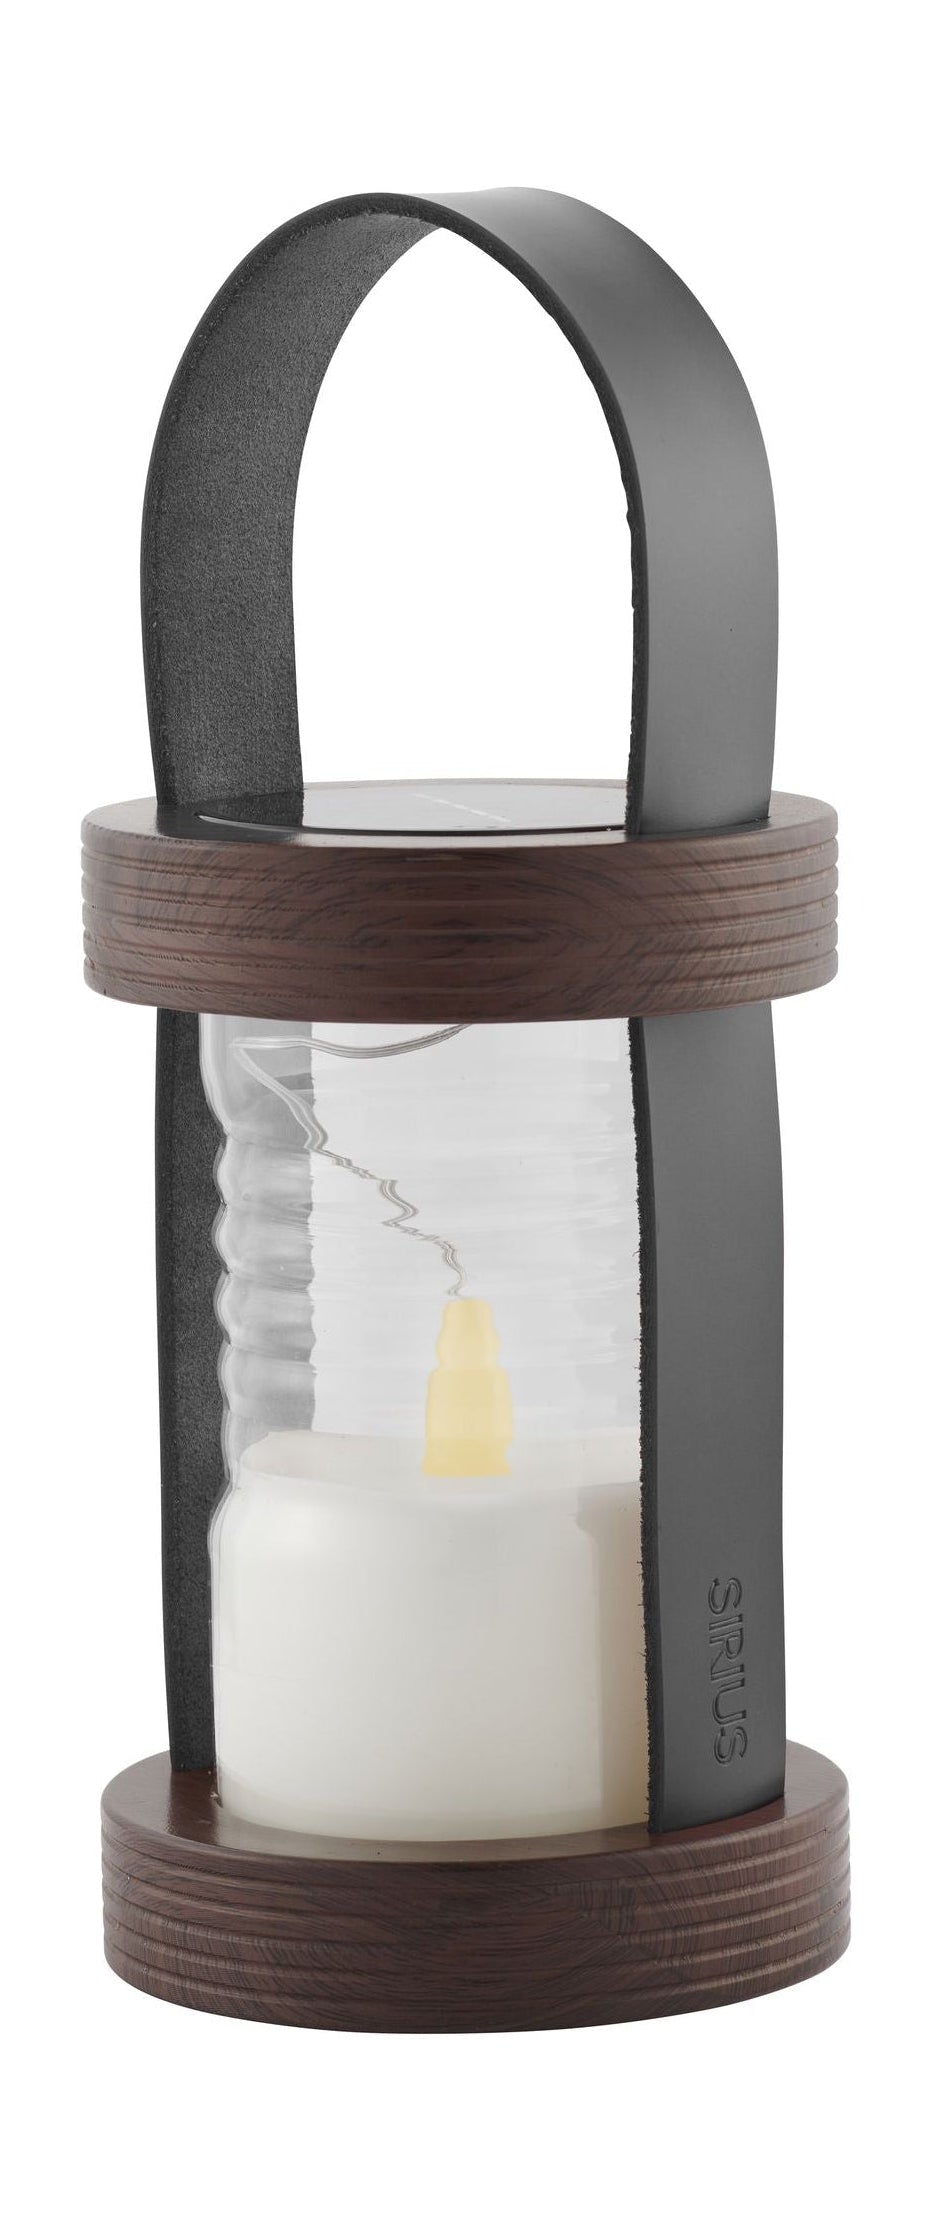 Syrius Aston Solar Lantern Øx H 12x26,5 cm, czarny/brązowy